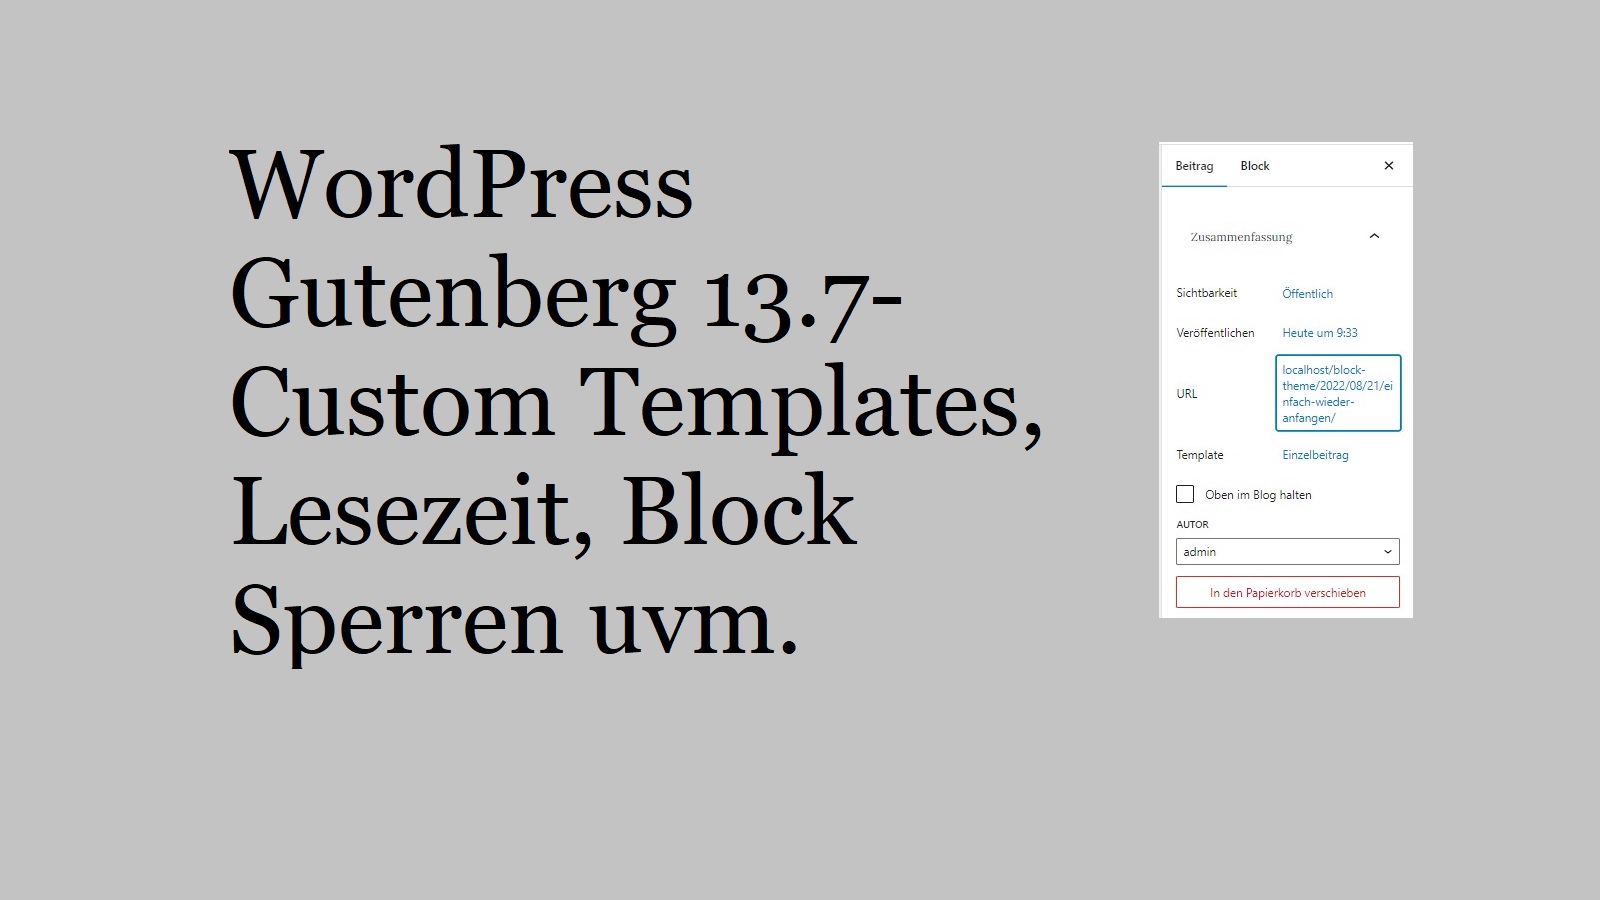 WordPress Gutenberg 13.7-  Custom Templates, Lesezeit, Block Sperren uvm.